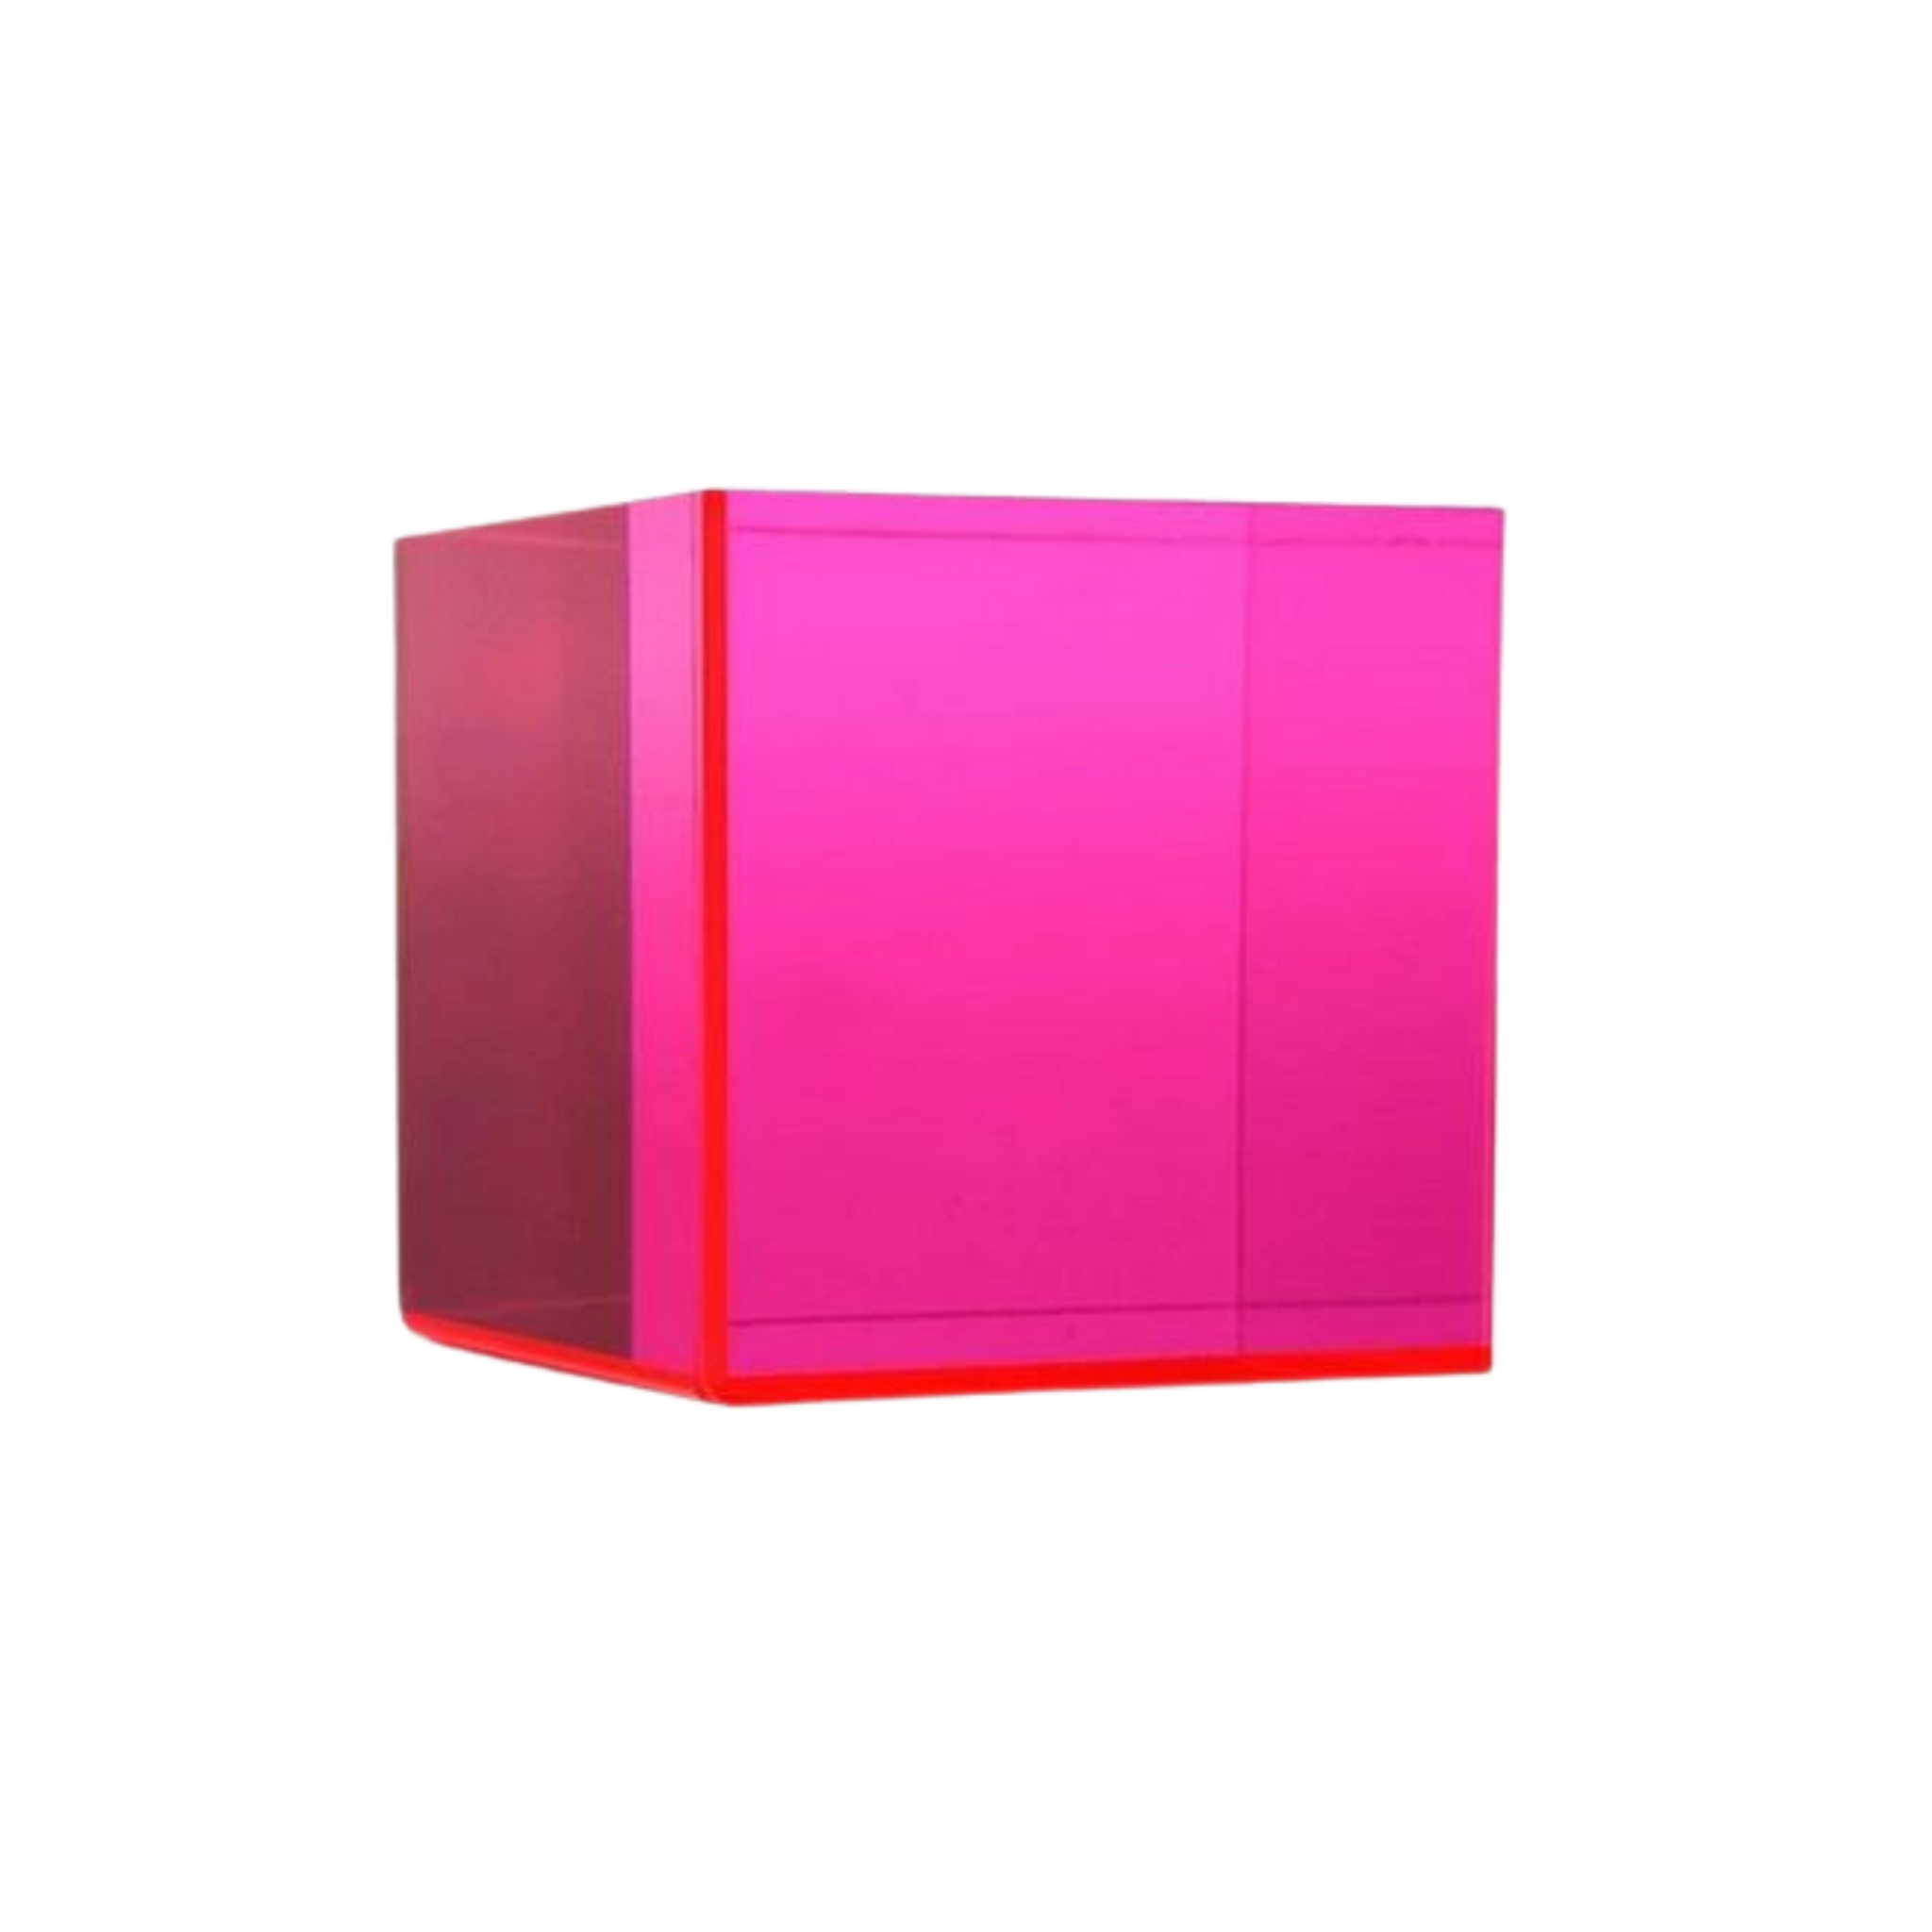 Color Acrylic Storage Cubes